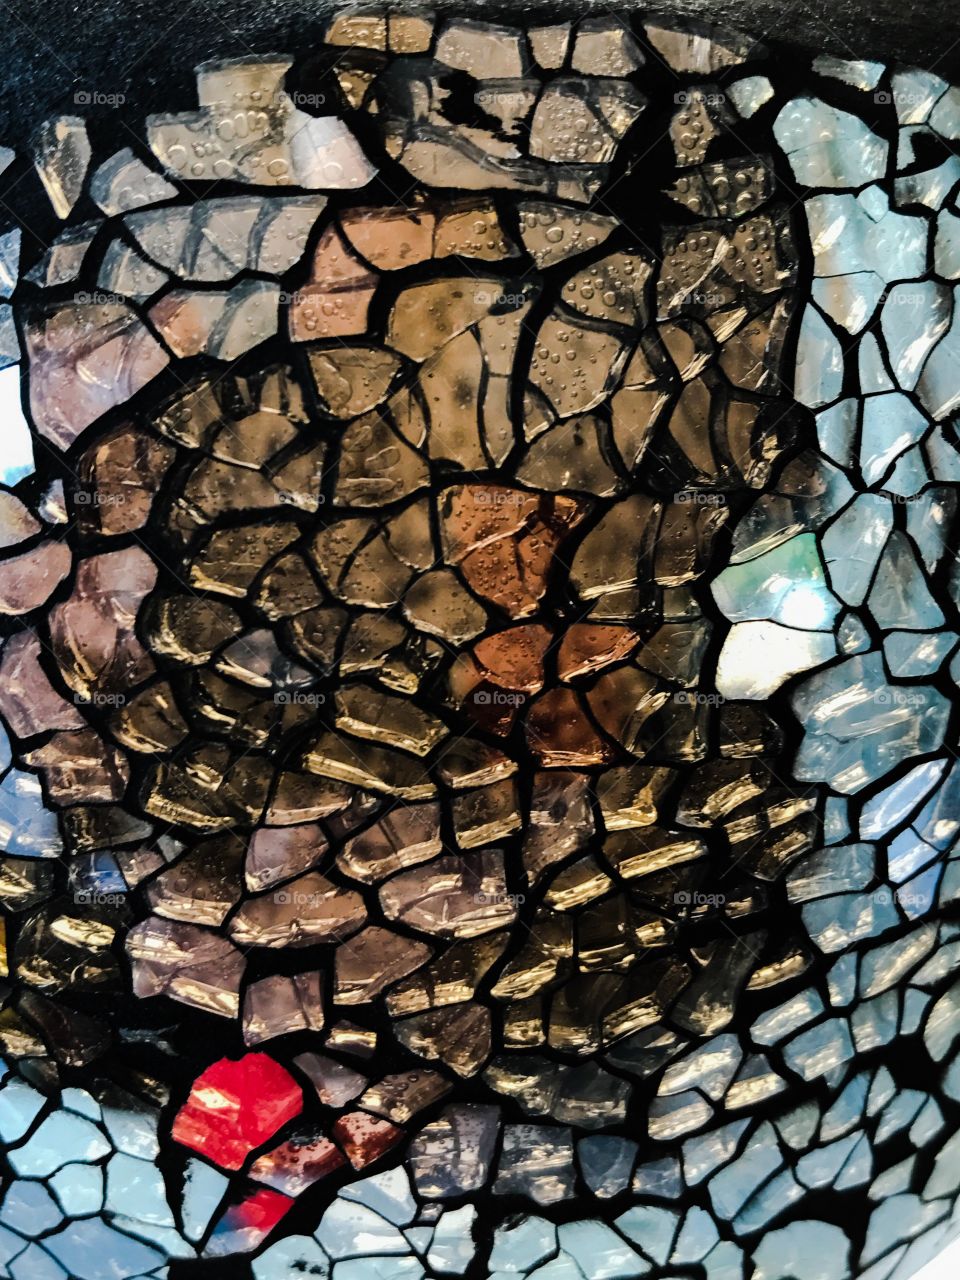 Mosaic vase